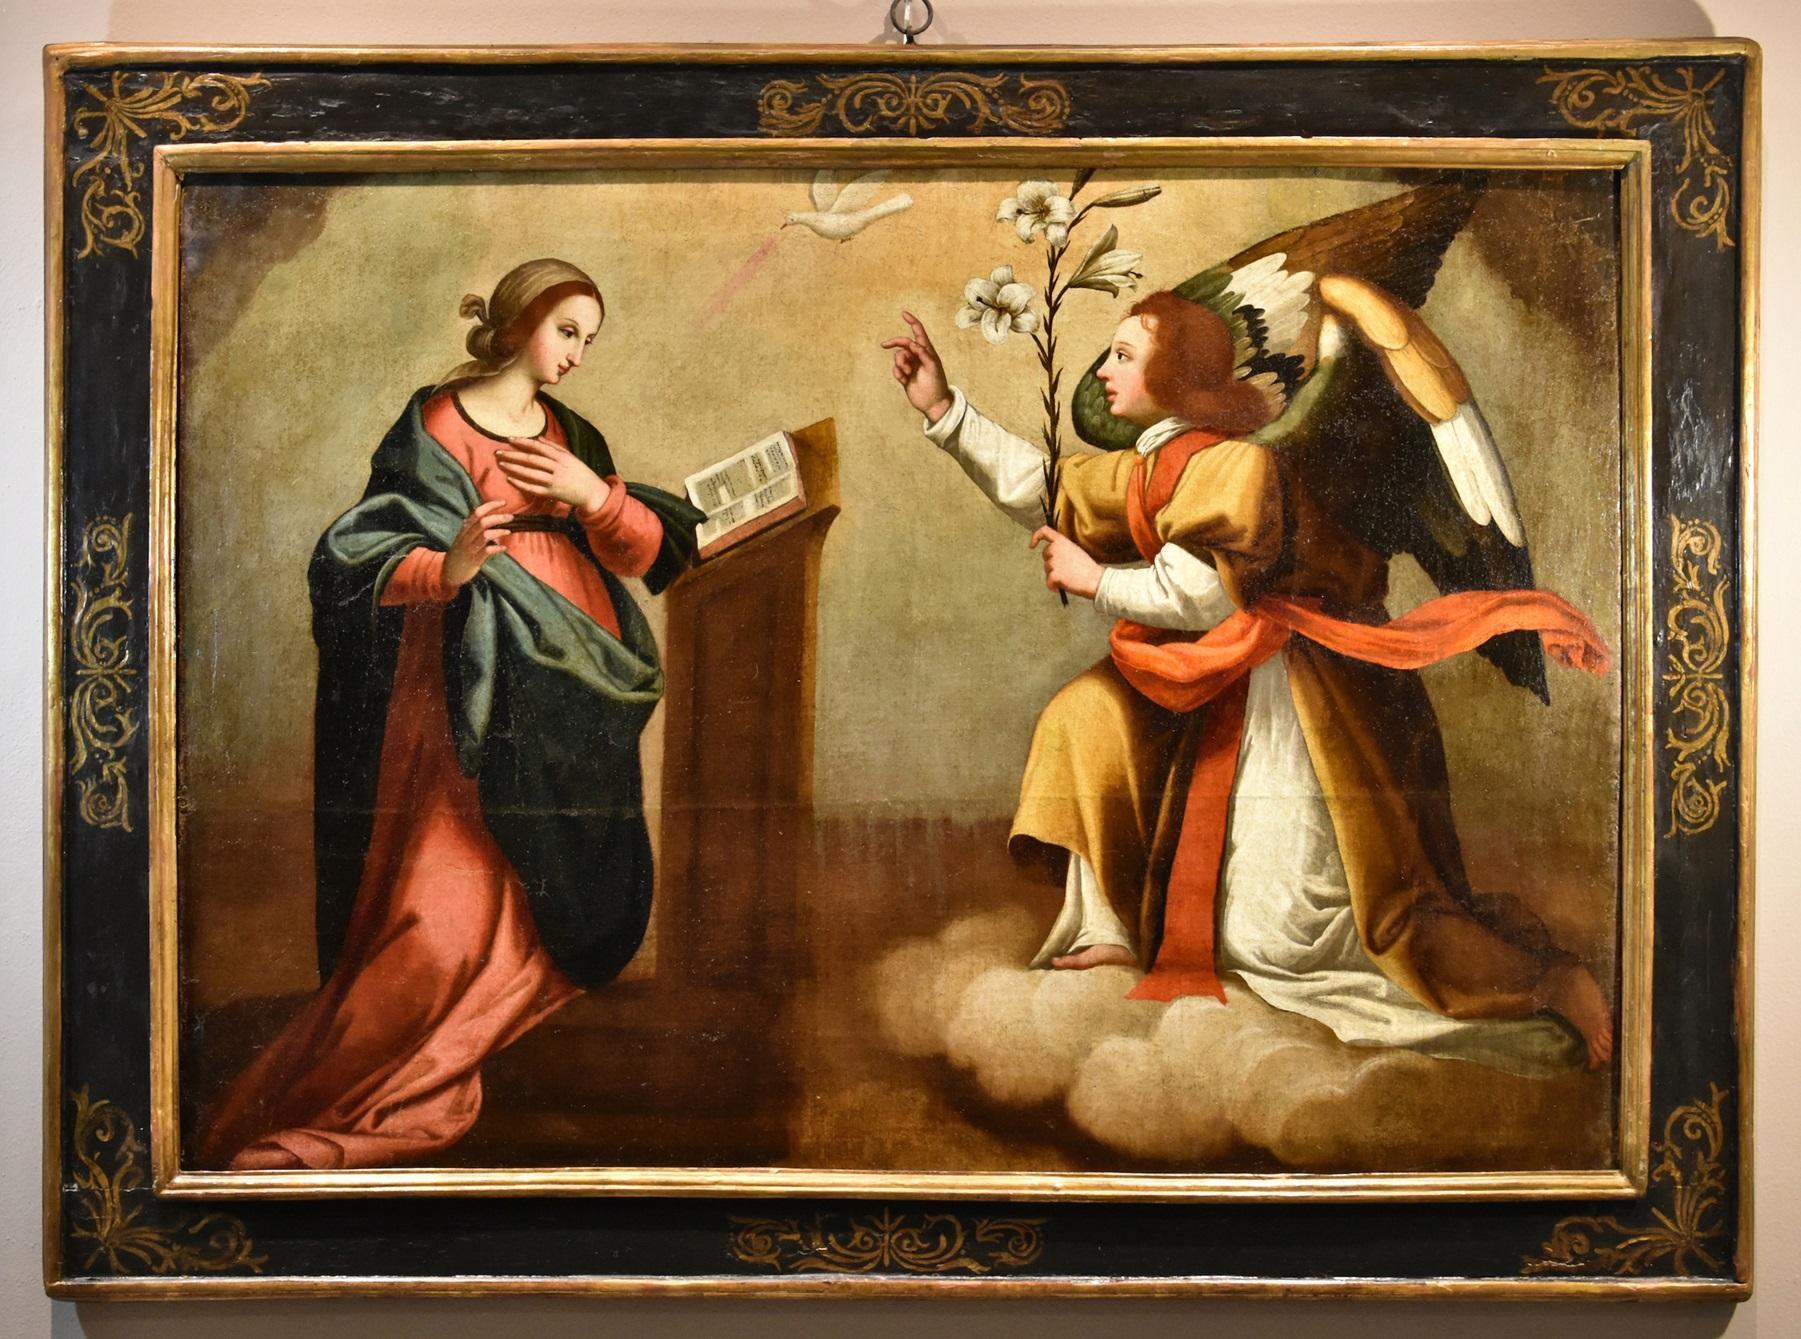 Annunciation Ceraiolo peinture sur toile 16ème siècle maître ancien Firenze Italie - Painting de Antonio Del Ceraiolo (active In Florence, Early 16th Century)